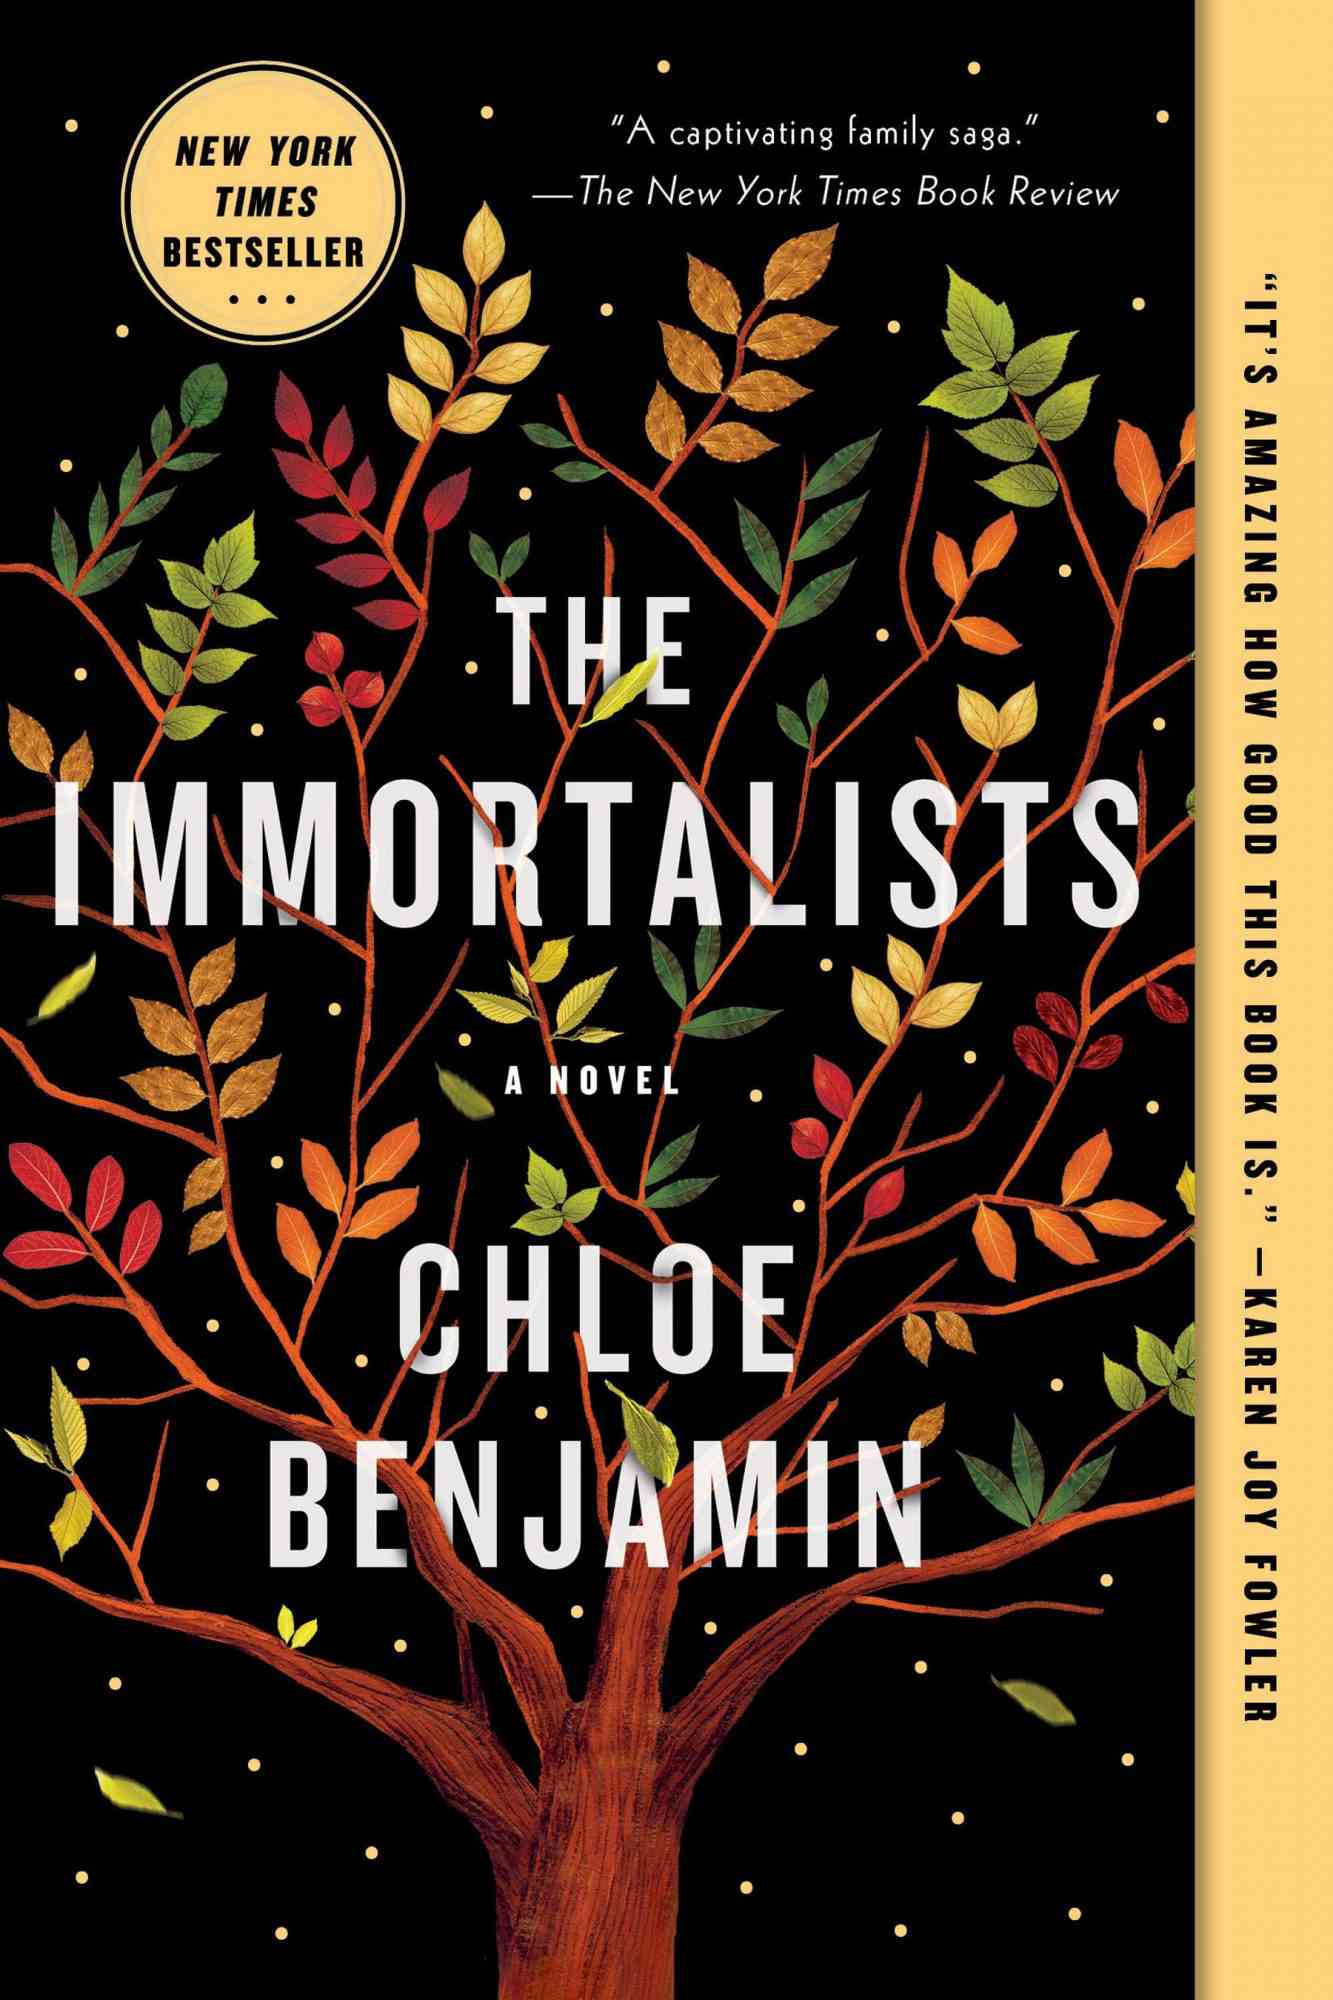 The Immortalists, by Chloe Benjamin